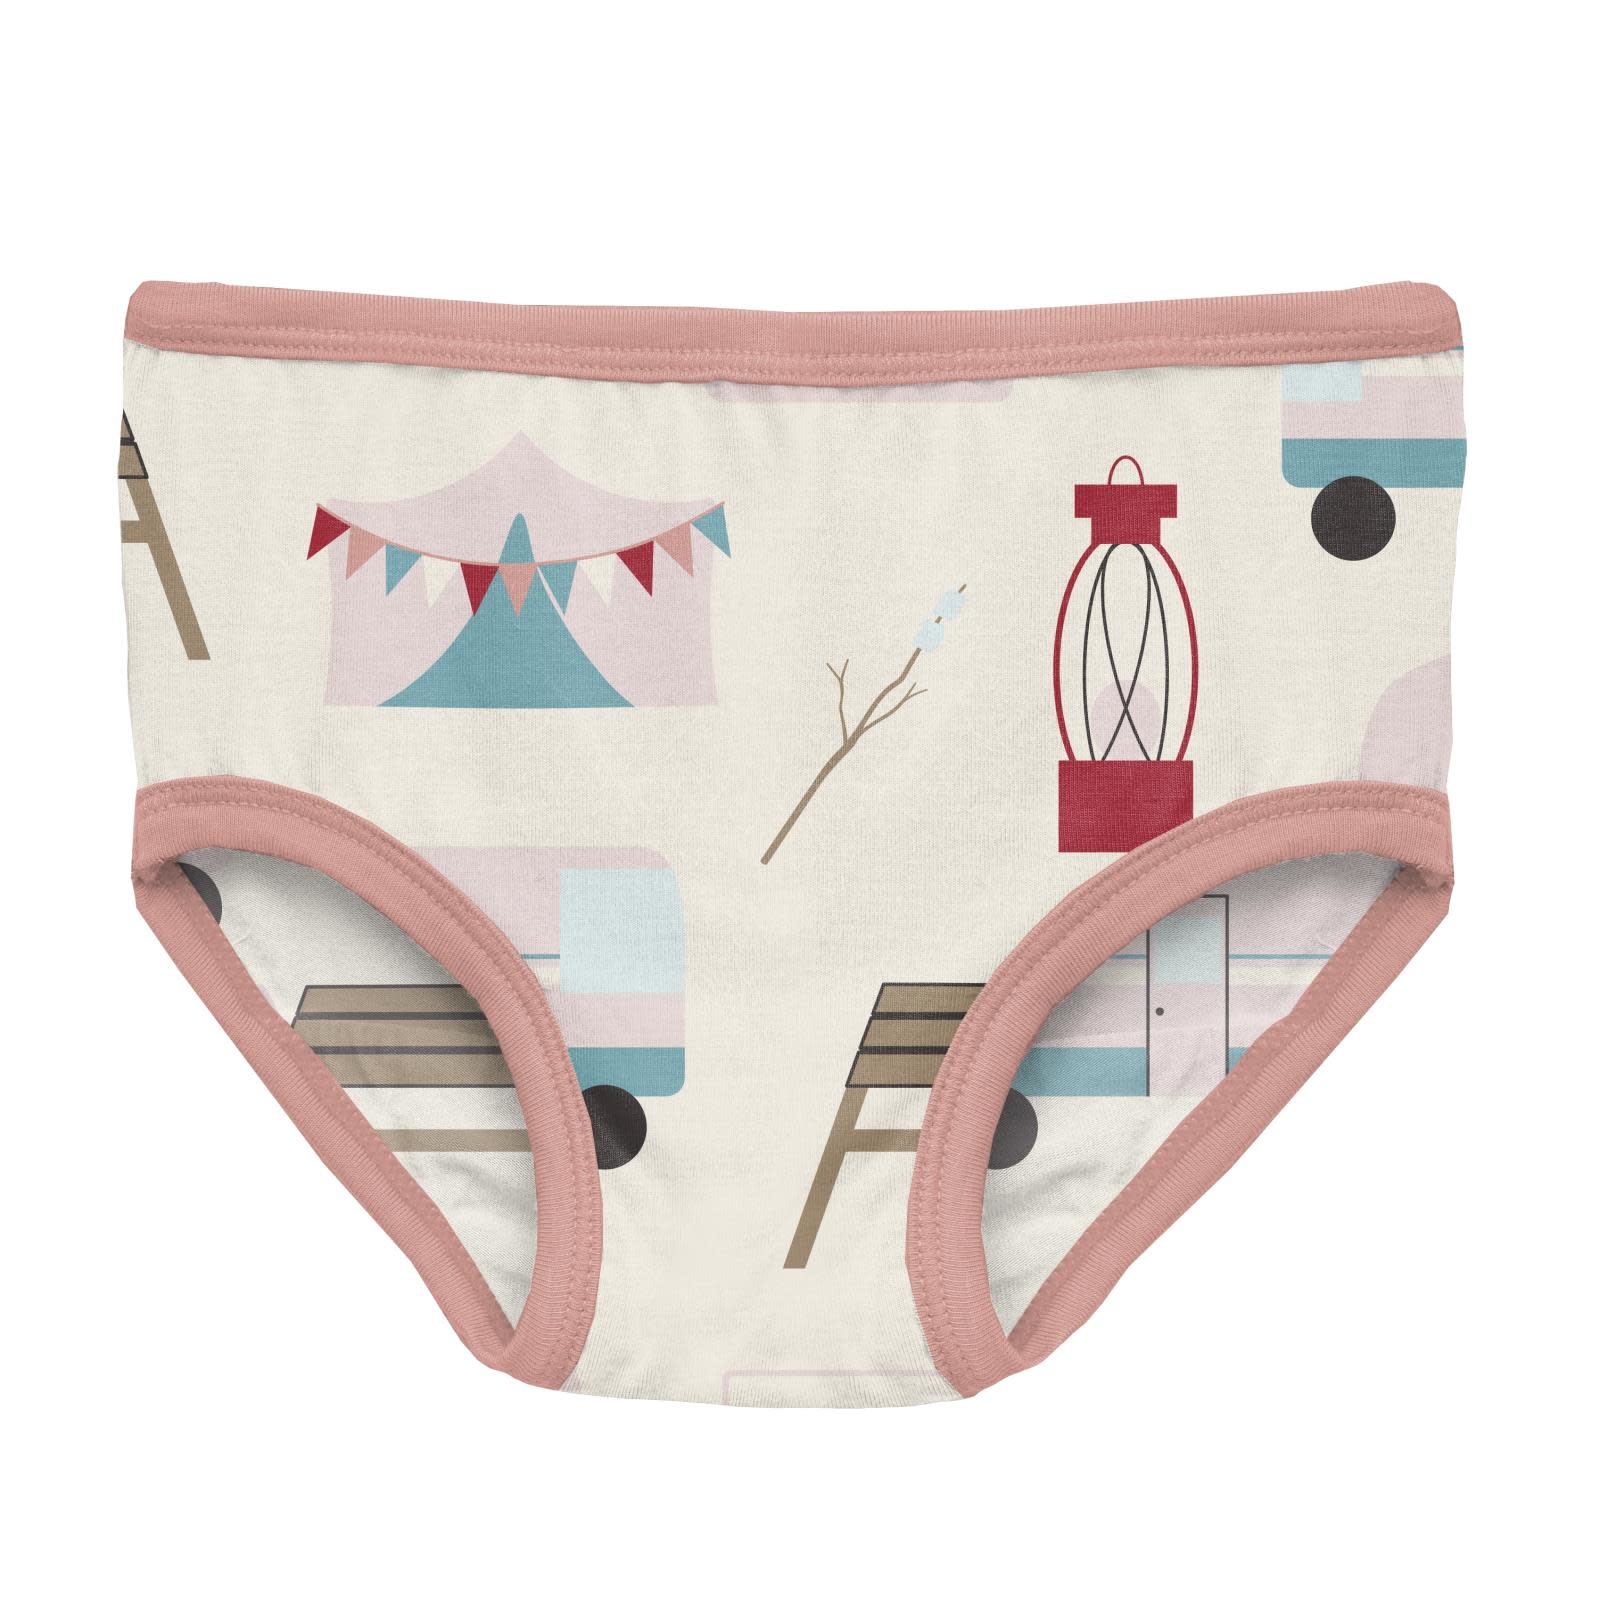 Cute & Comfy Girls' Print Underwear: Shop Kickee Pants Now! - Bellaboo